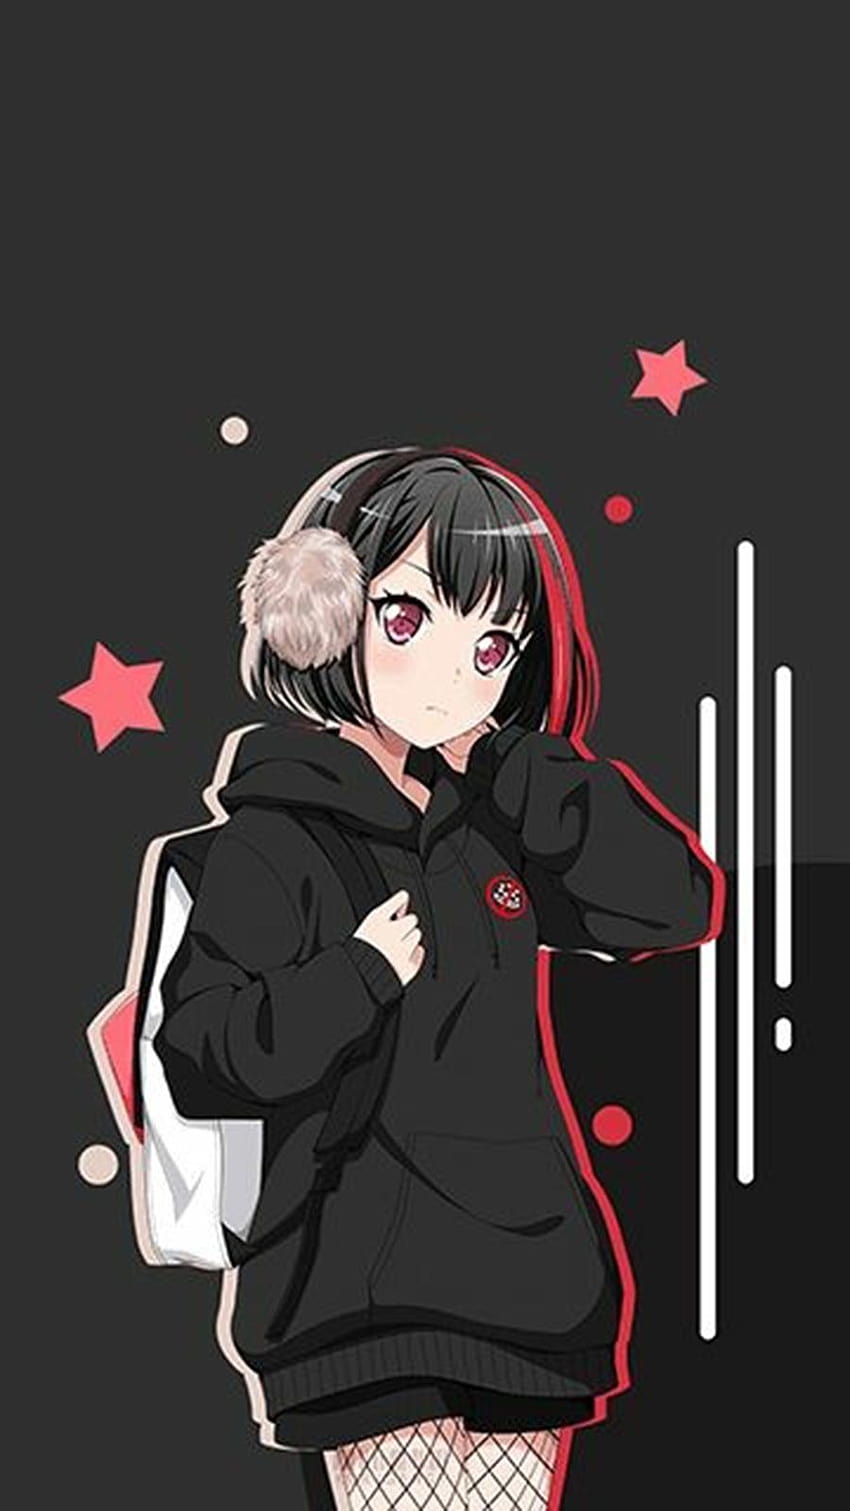 Cute Anime girl 4K Wallpapers  HD Wallpapers  ID 29817